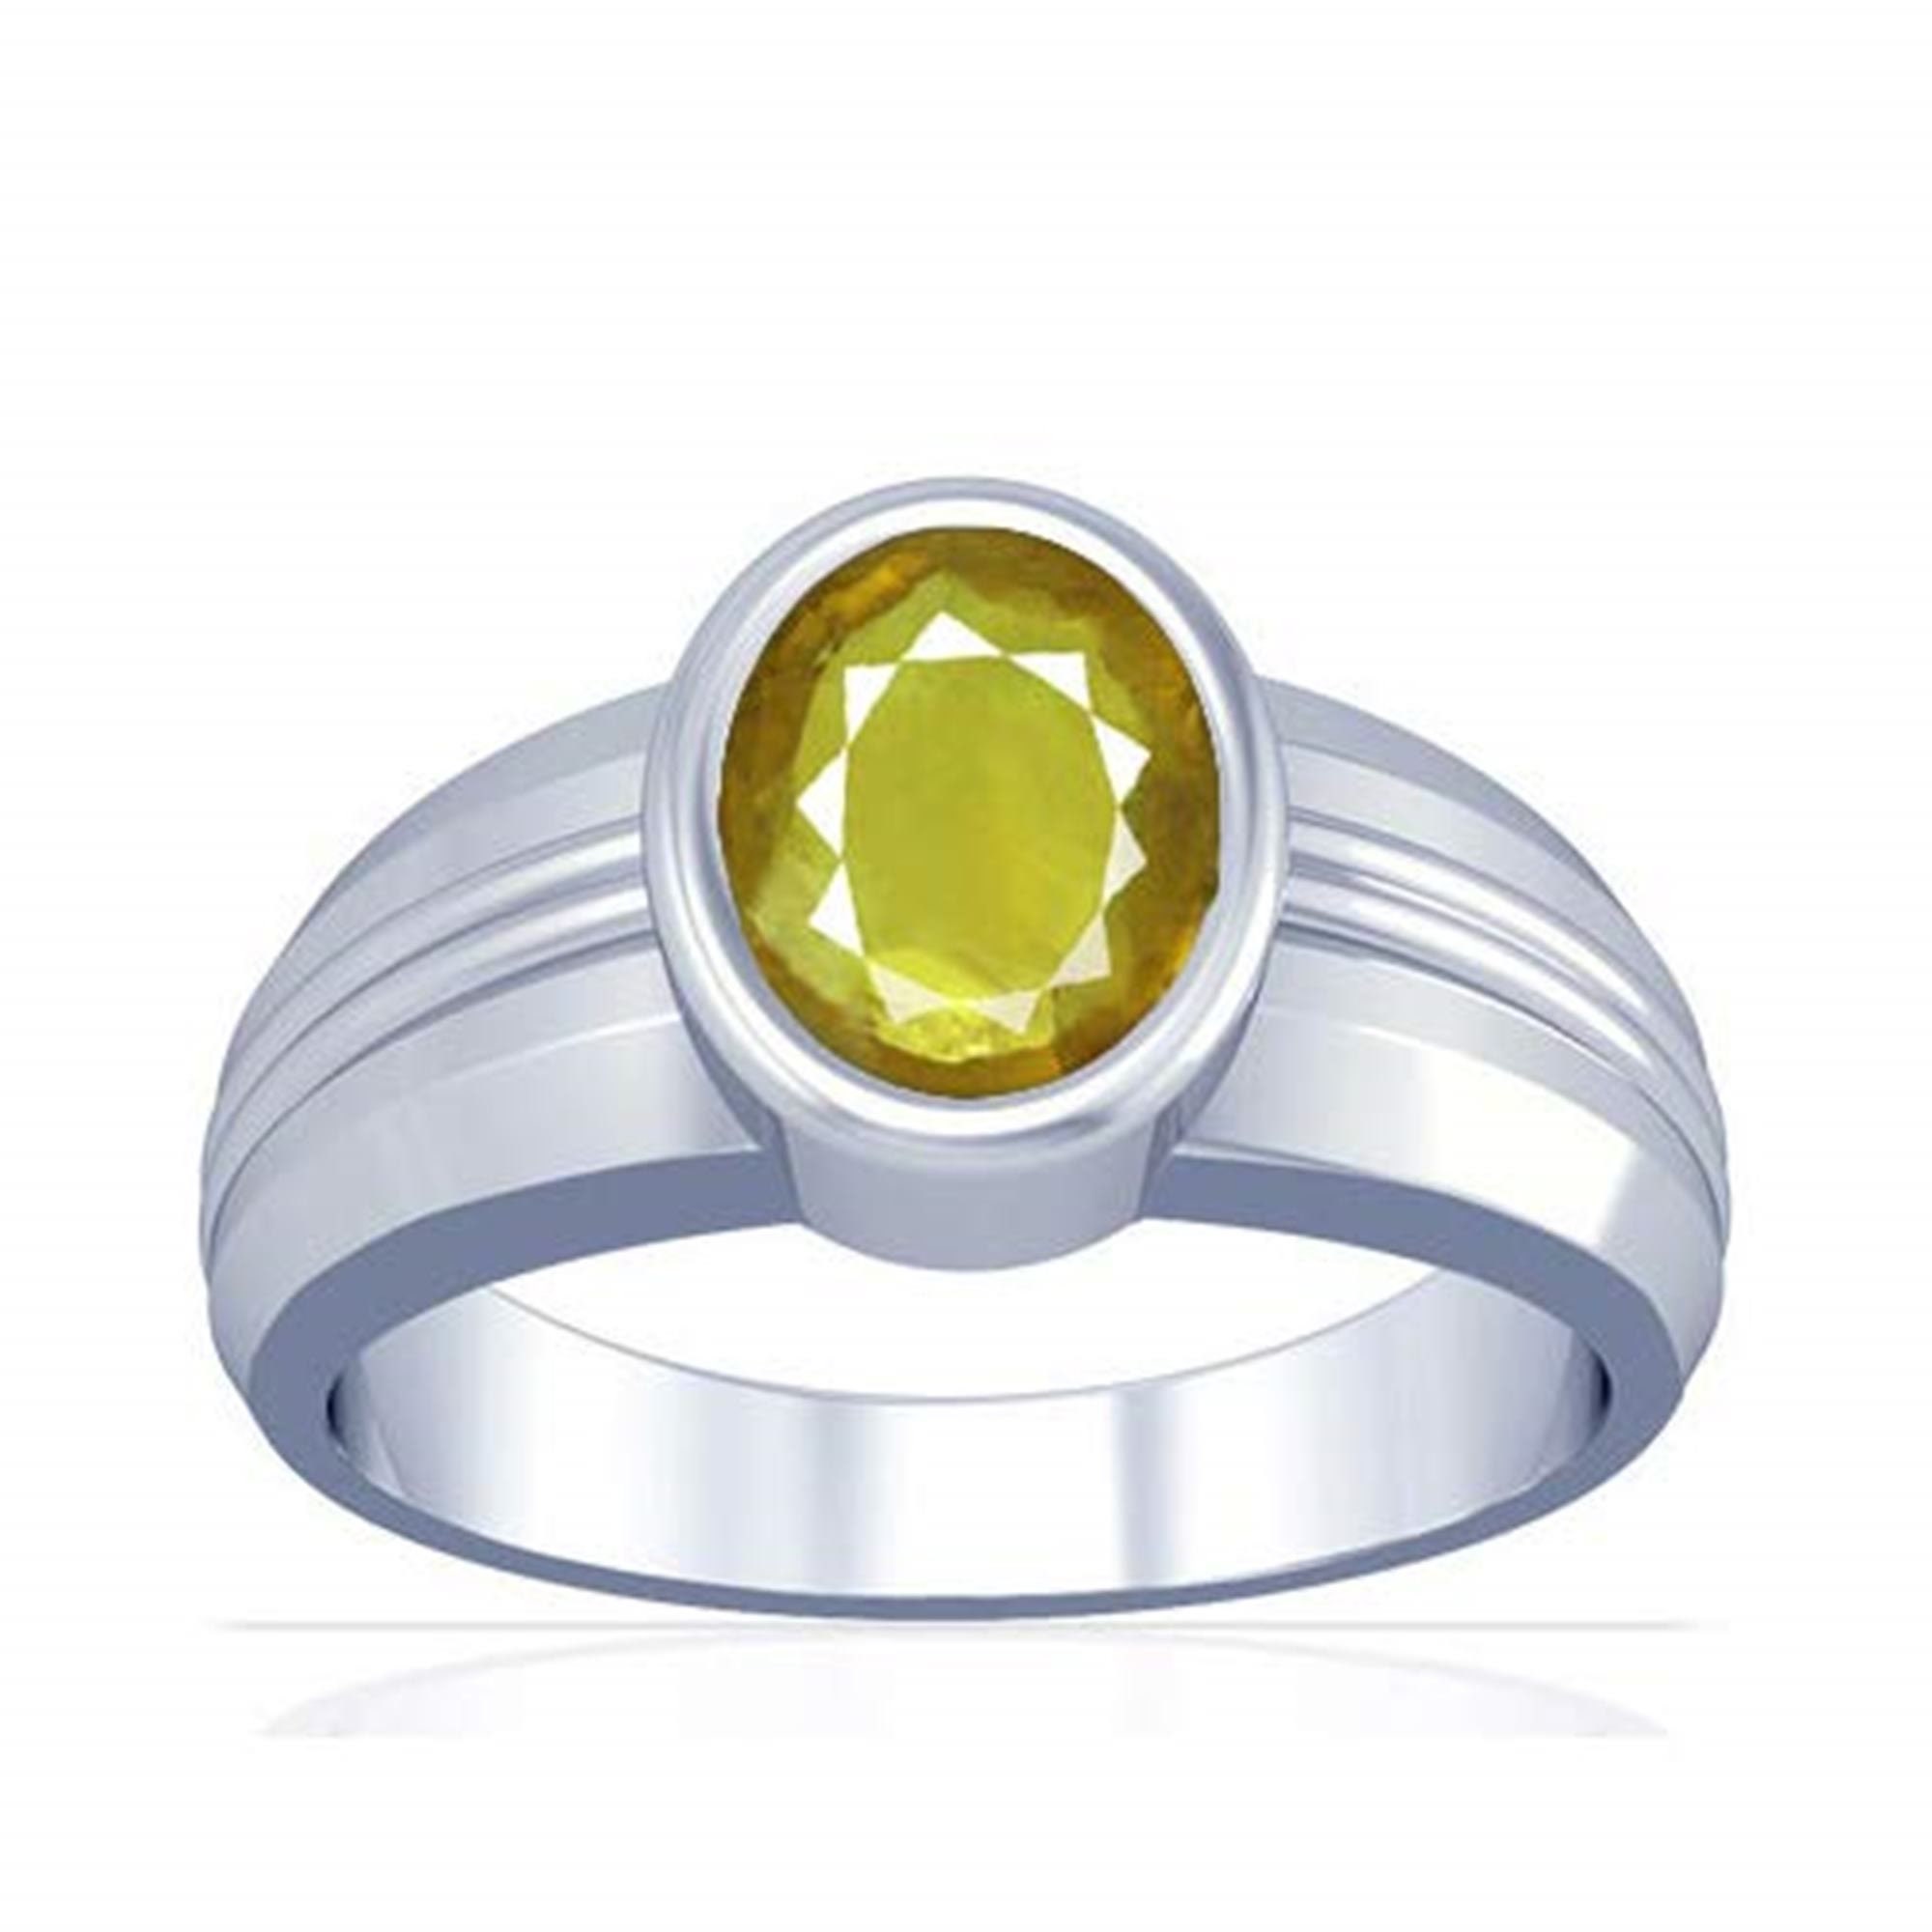 Amman Gold & Diamond LLP - Pukhraj Ring AMMA'N' GOLD & DIAMOND LLP Brings  to Certified Natural Yellow Sapphire (Pukhraj) Silver Ring Stone:- 2.26 Ct Yellow  Sapphire or Pukhraj is a Gemstone